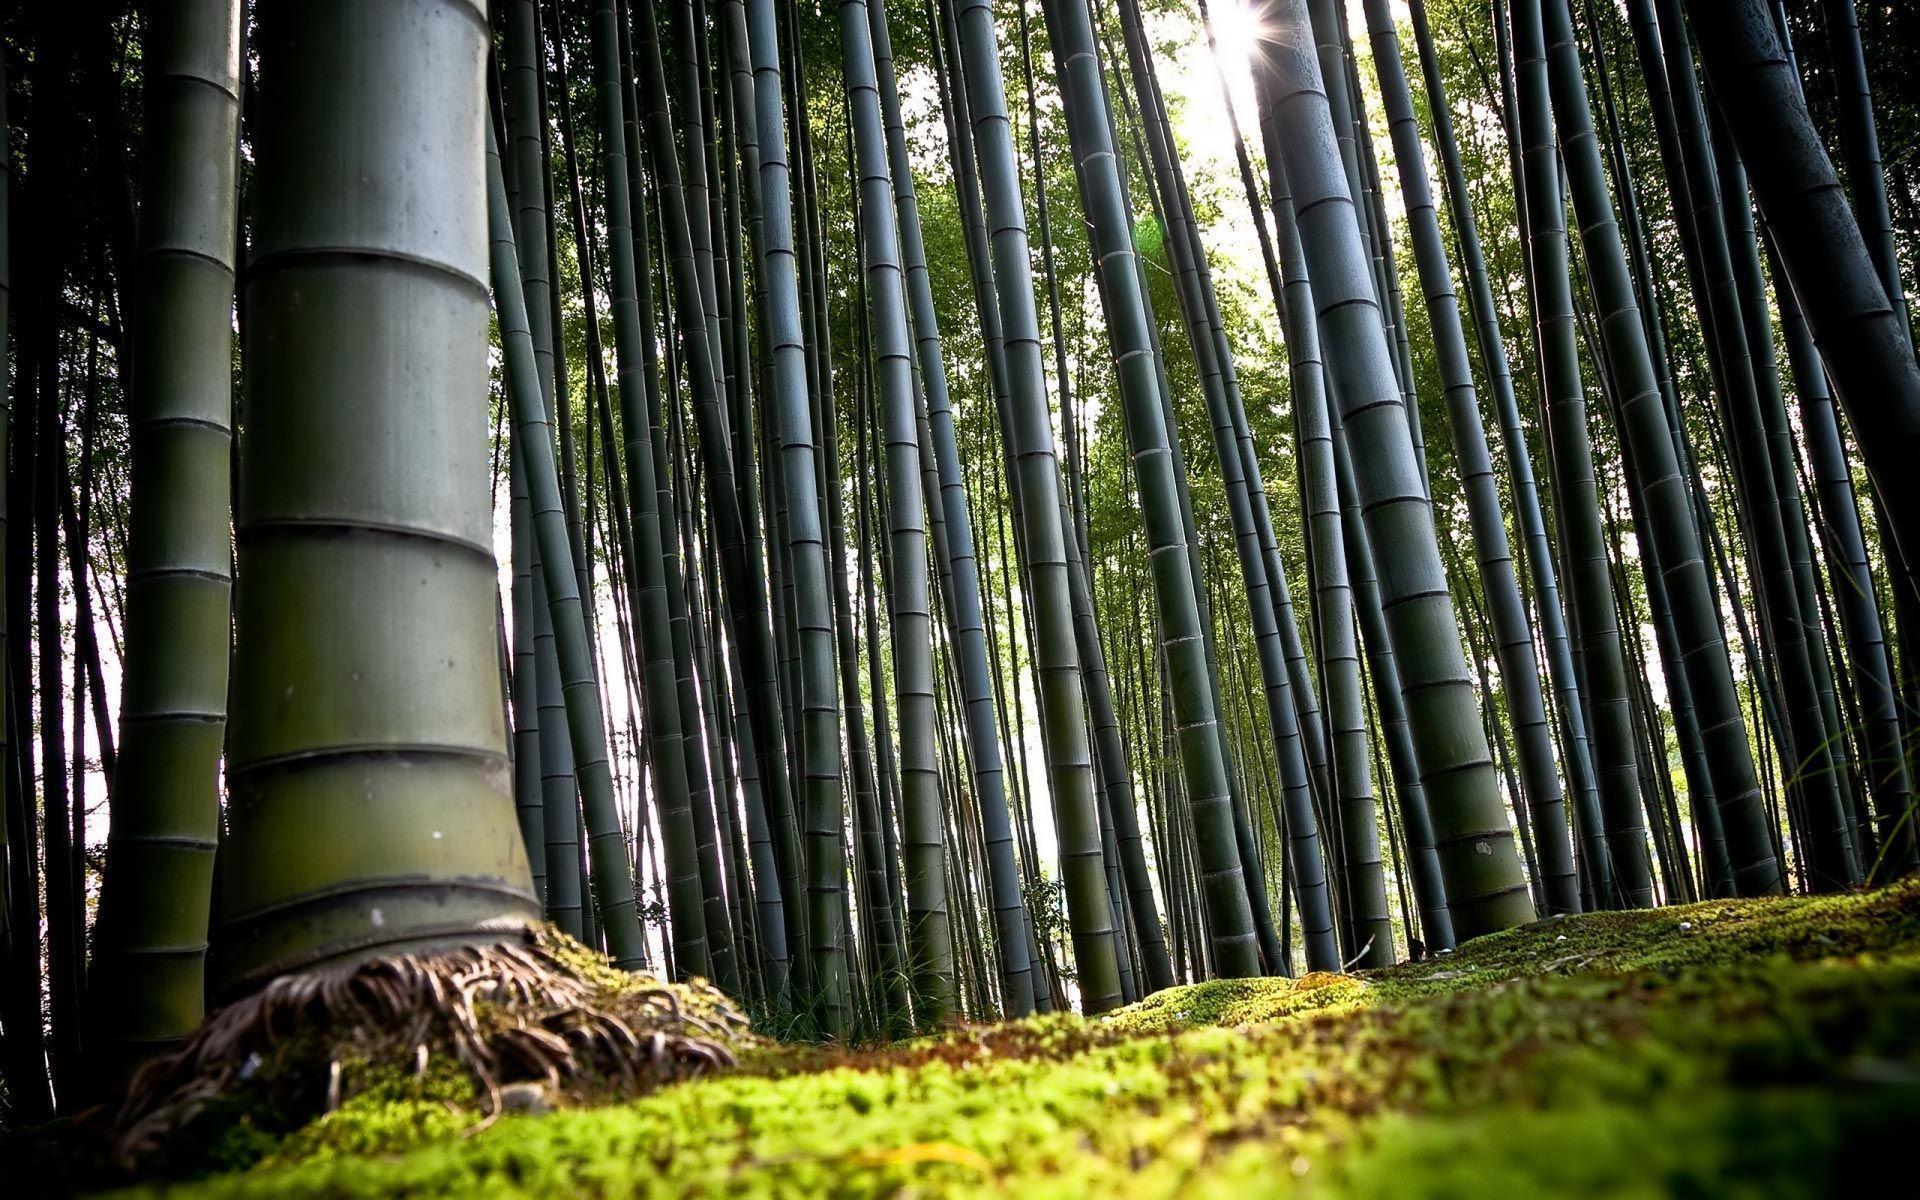 Desktop Wallpaper · Gallery · Windows 7 · Bamboo forest digital